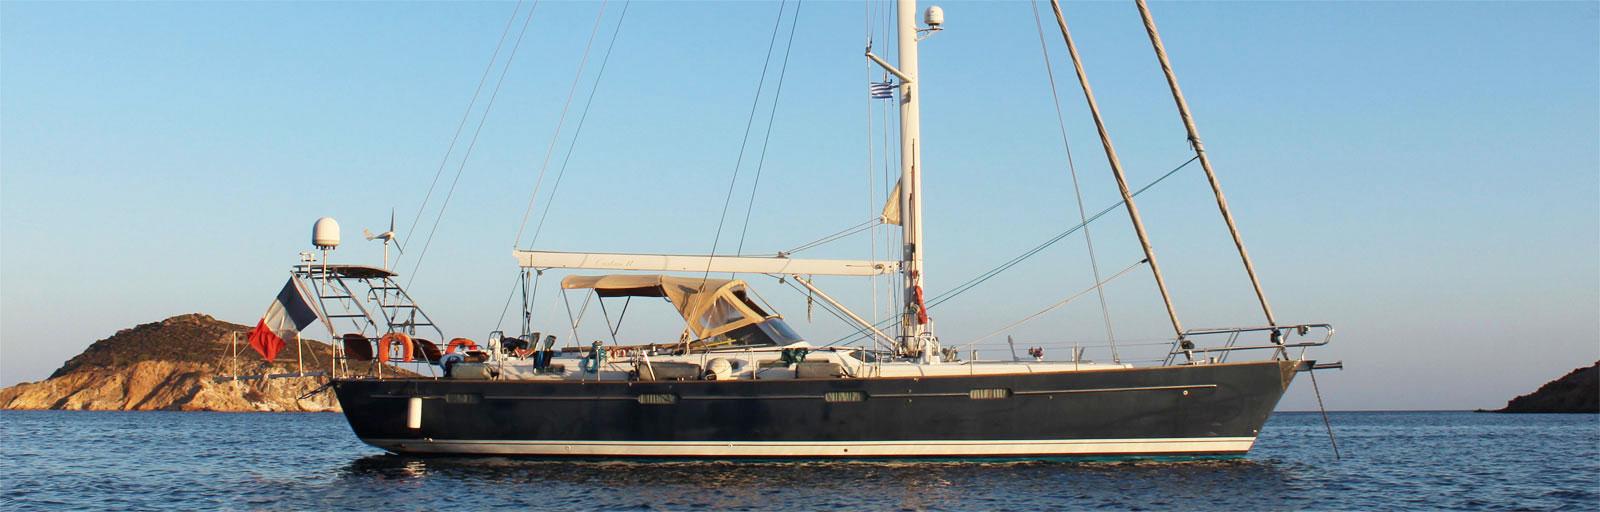 BENETEAU 57 - AYC Yachtbroker